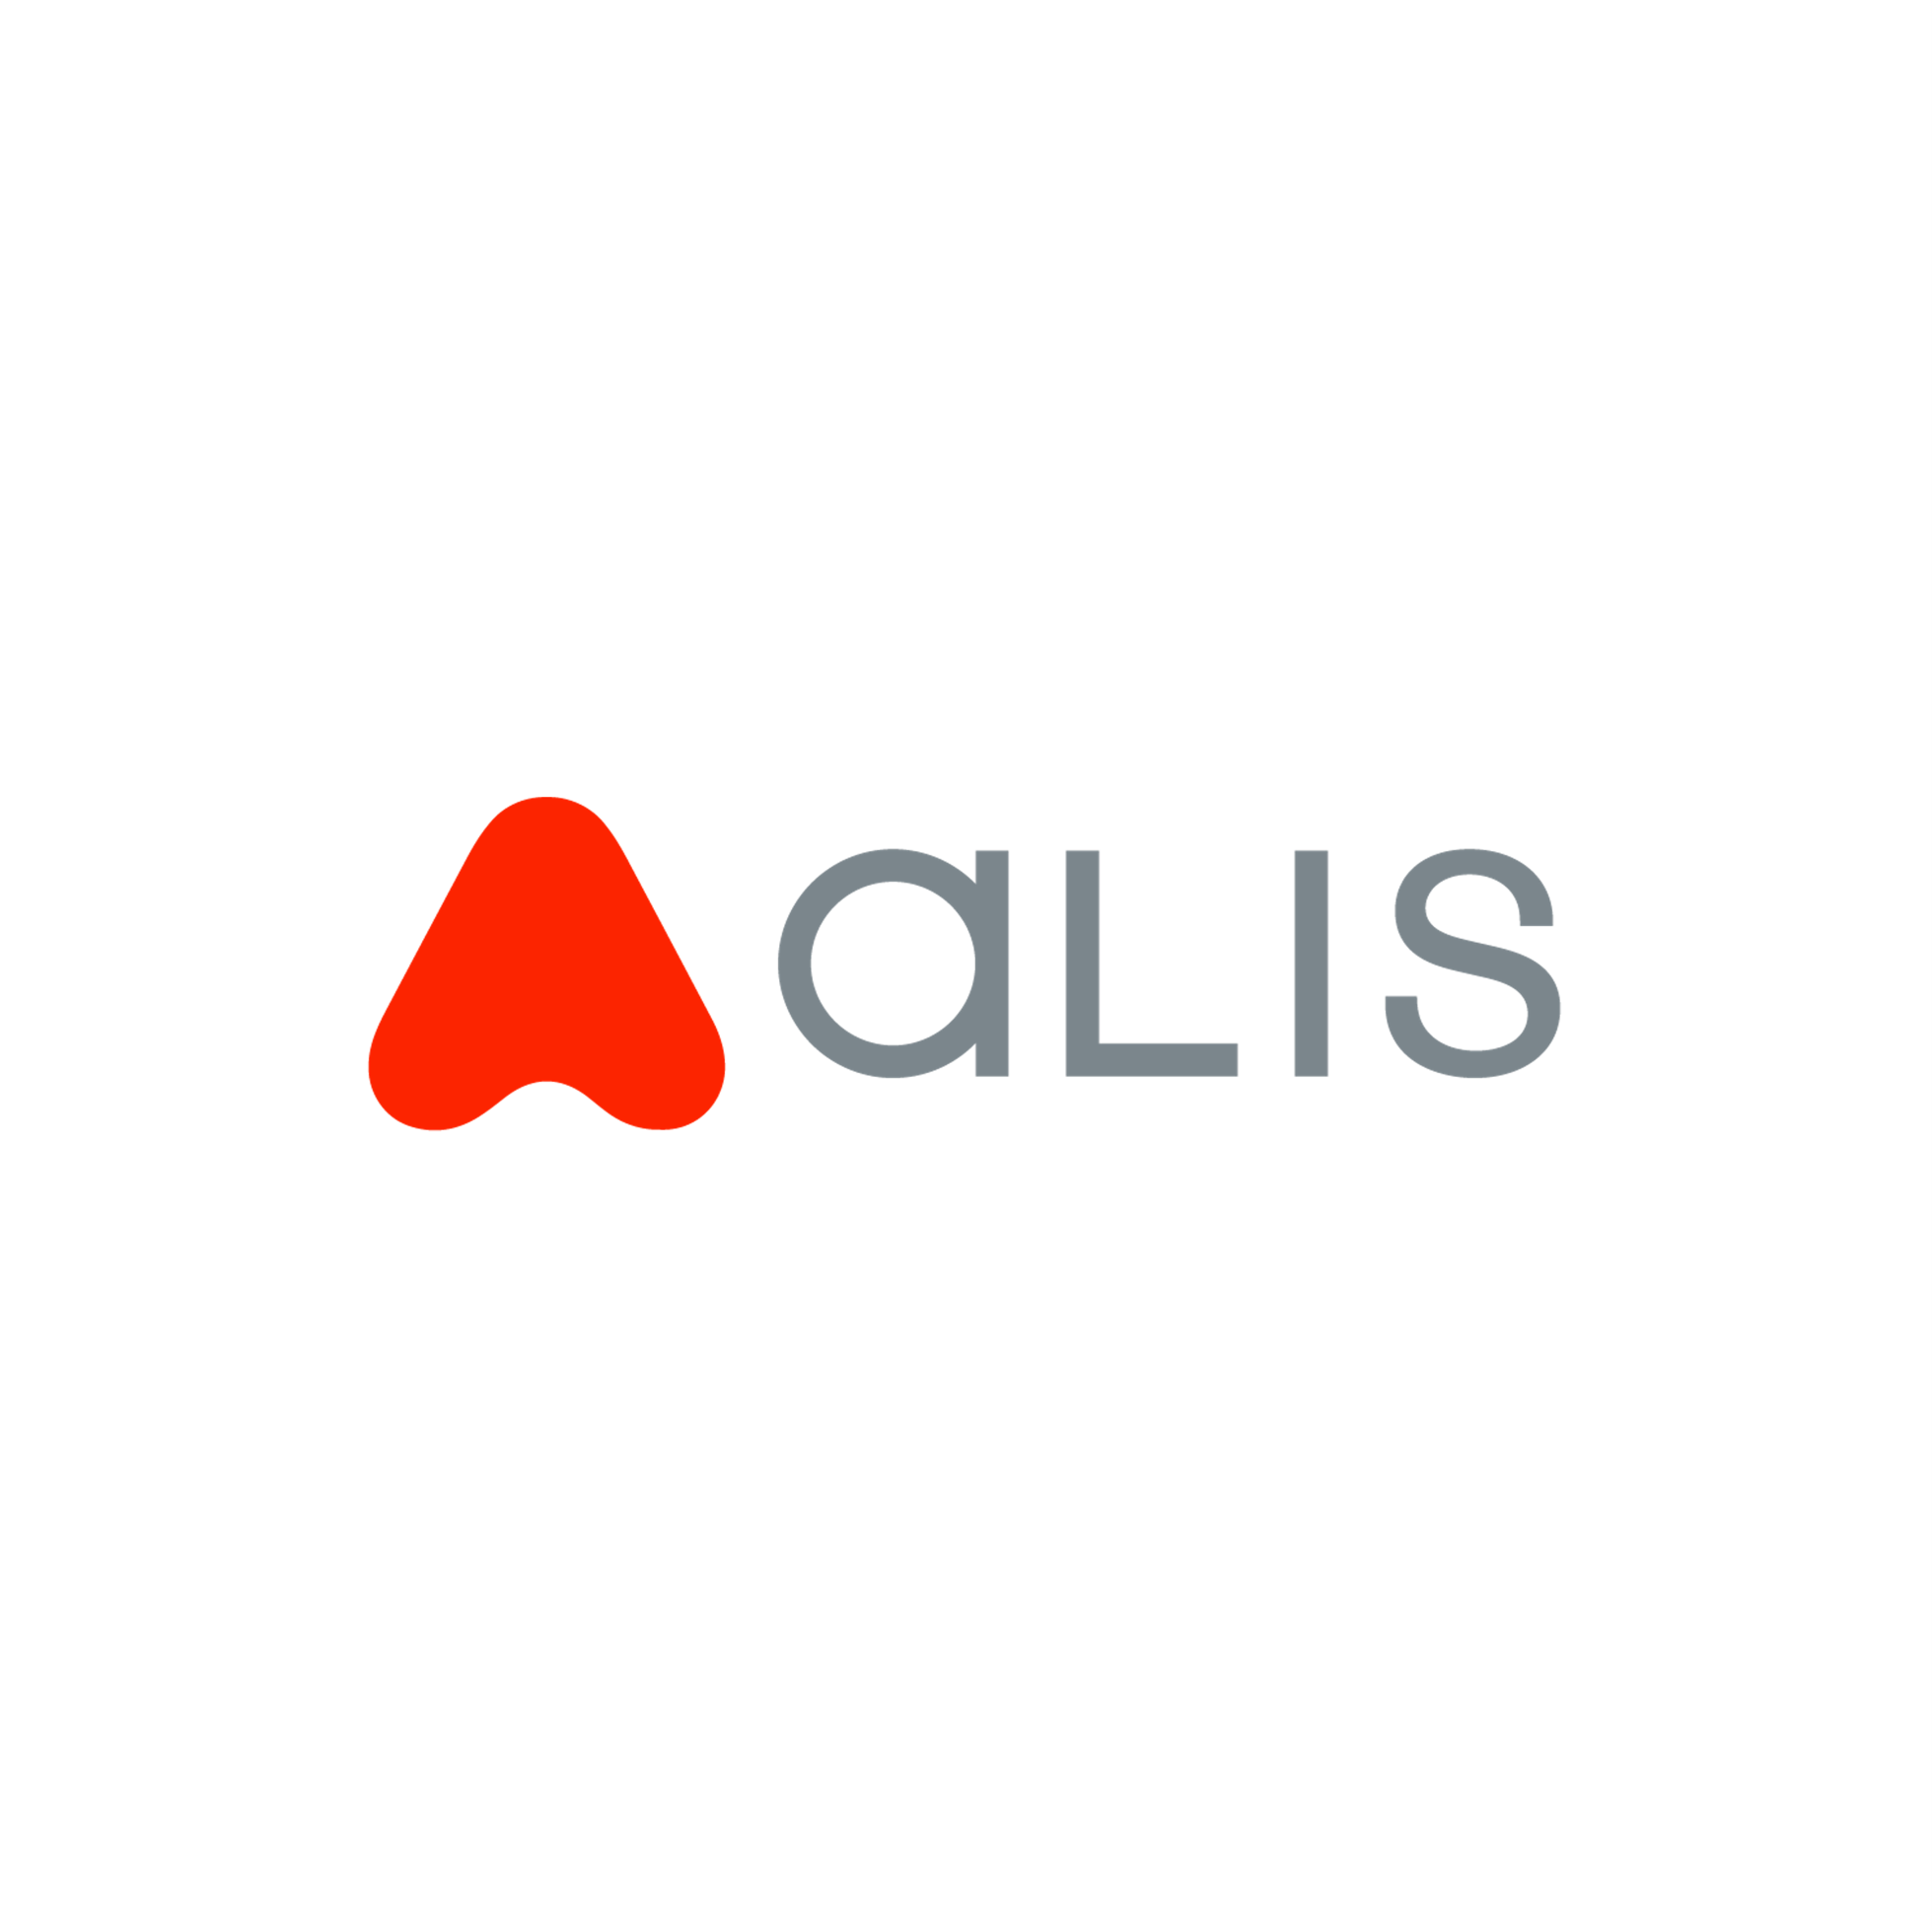 Logo ALIS International